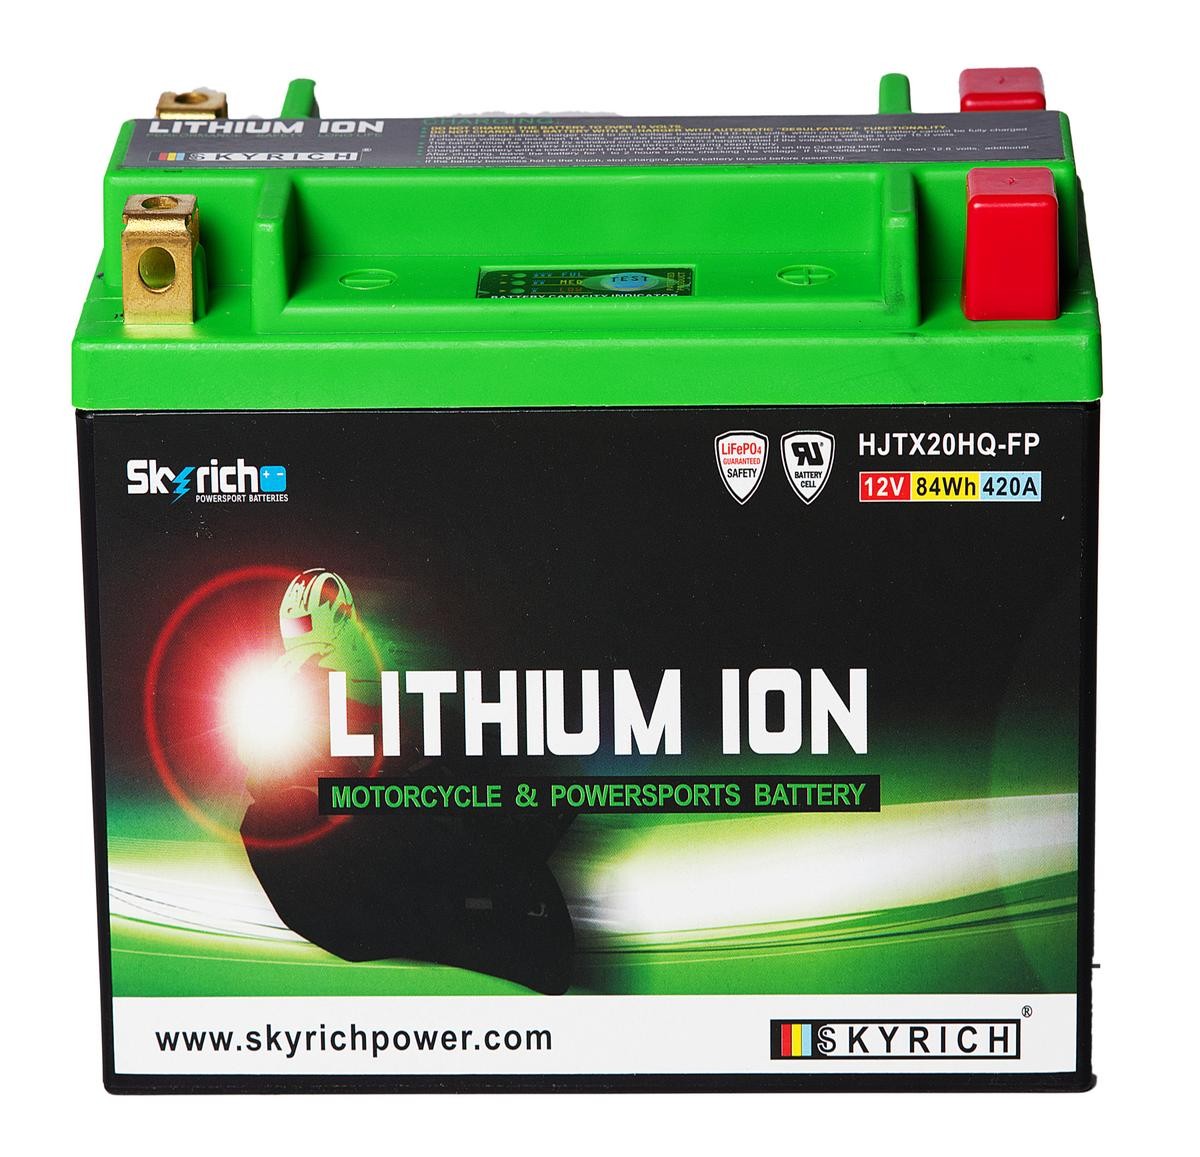 HARLEY-DAVIDSON LOW RIDER Batterie 12V 7Ah 420A N Li-Ionen-Batterie SKYRICH LITHIUM ION HJTX20HQ-FP